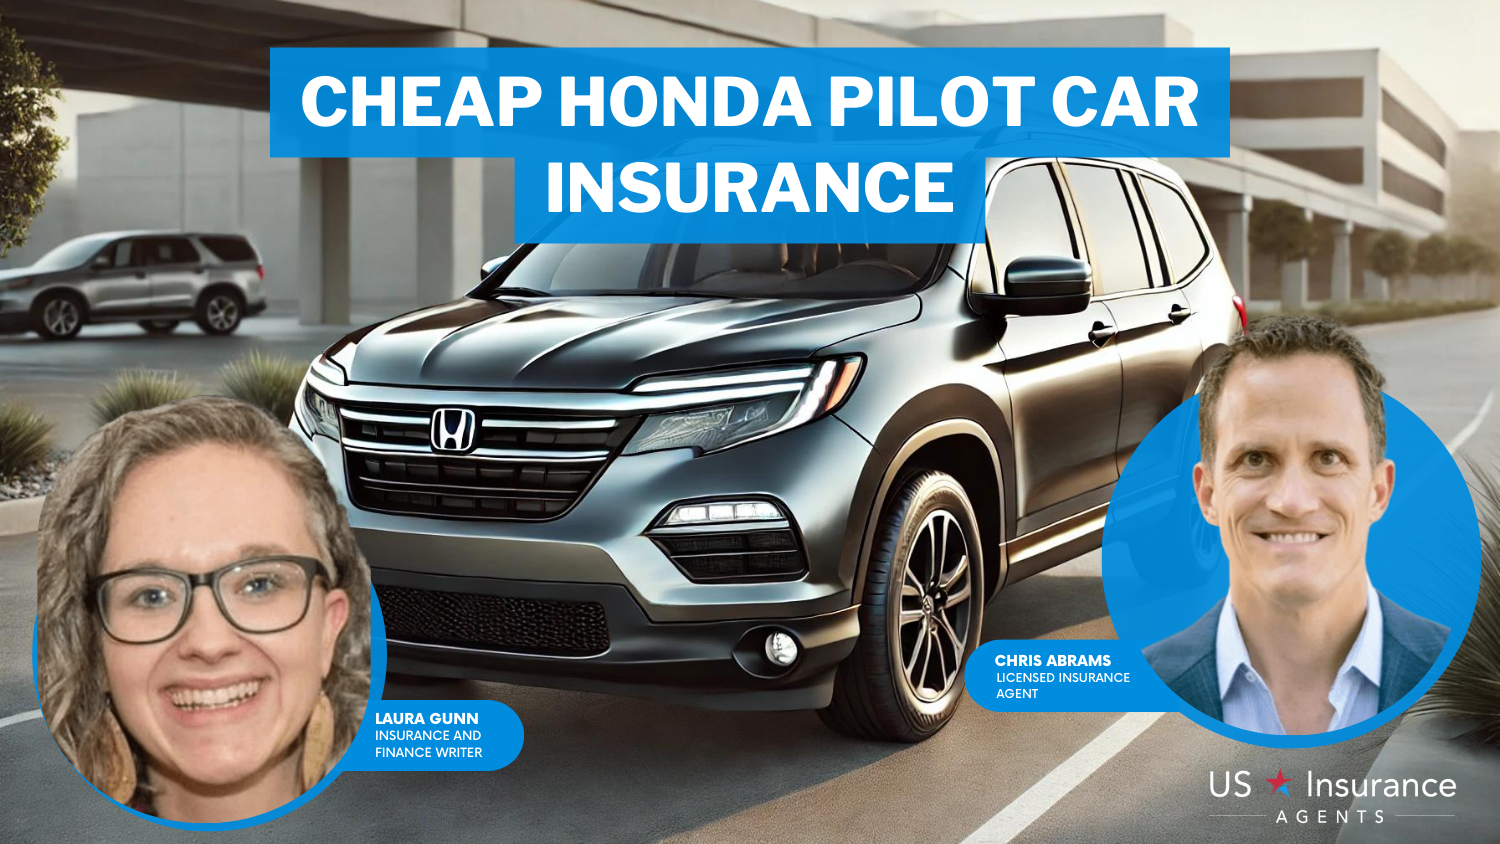 Cheap Honda Pilot Car Insurance: State Farm, Progressive, and Nationwide